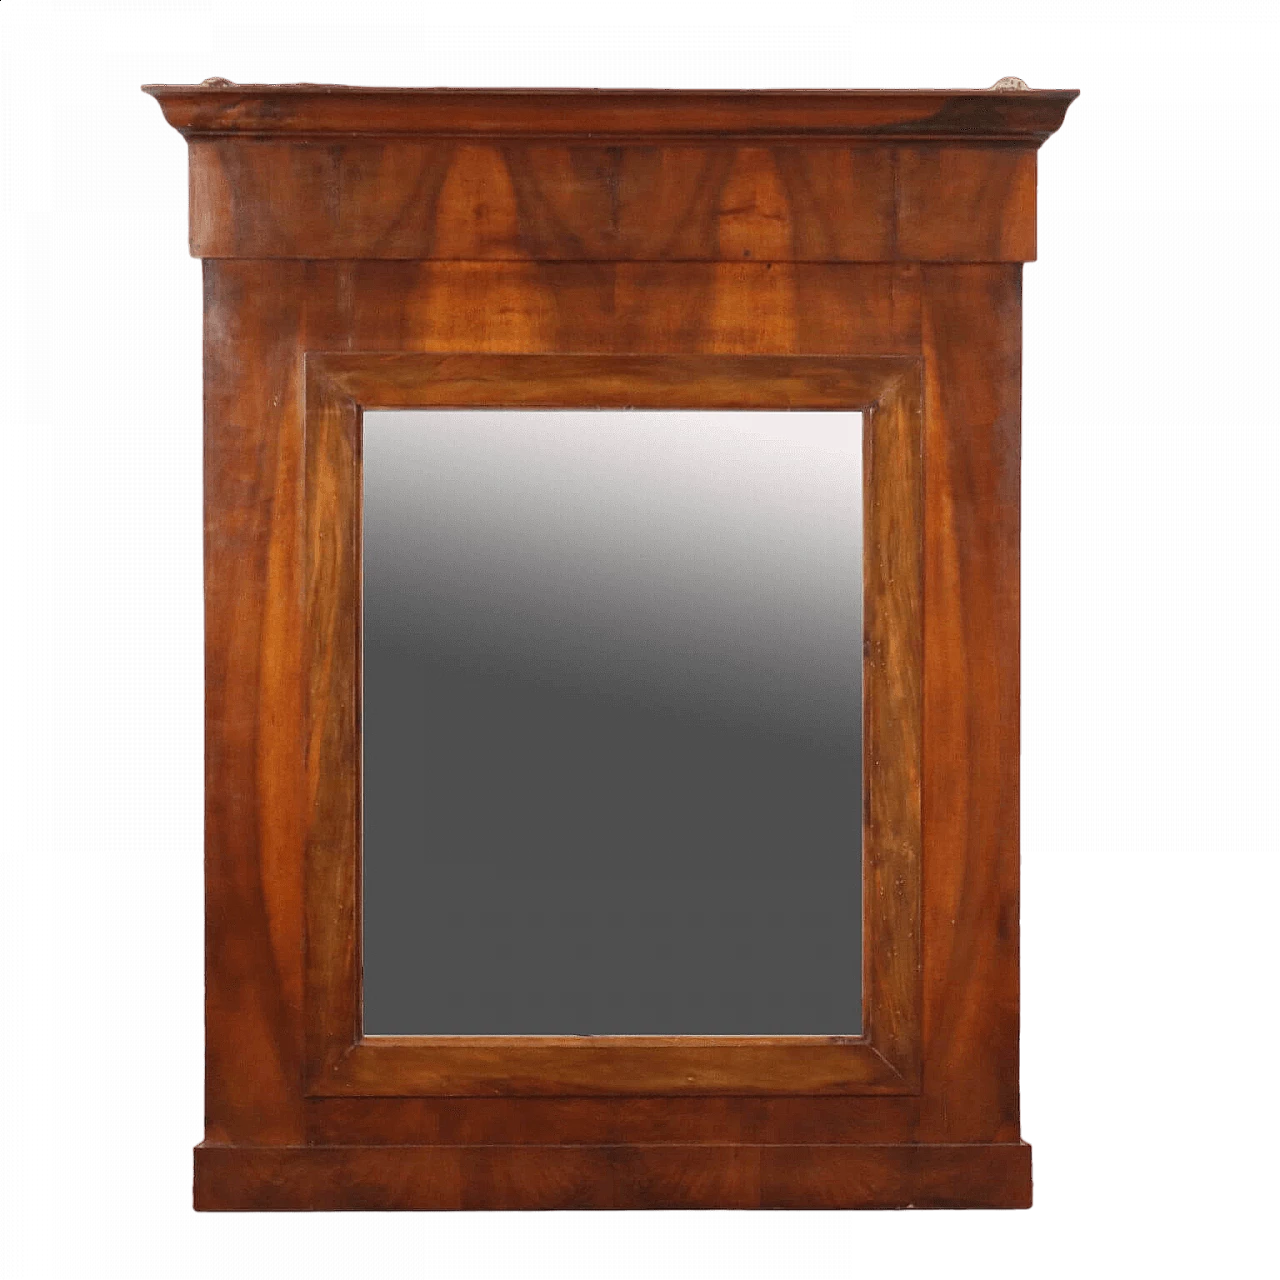 Mahogany veneered spruce mantelpiece mirror, mid-19th century 11